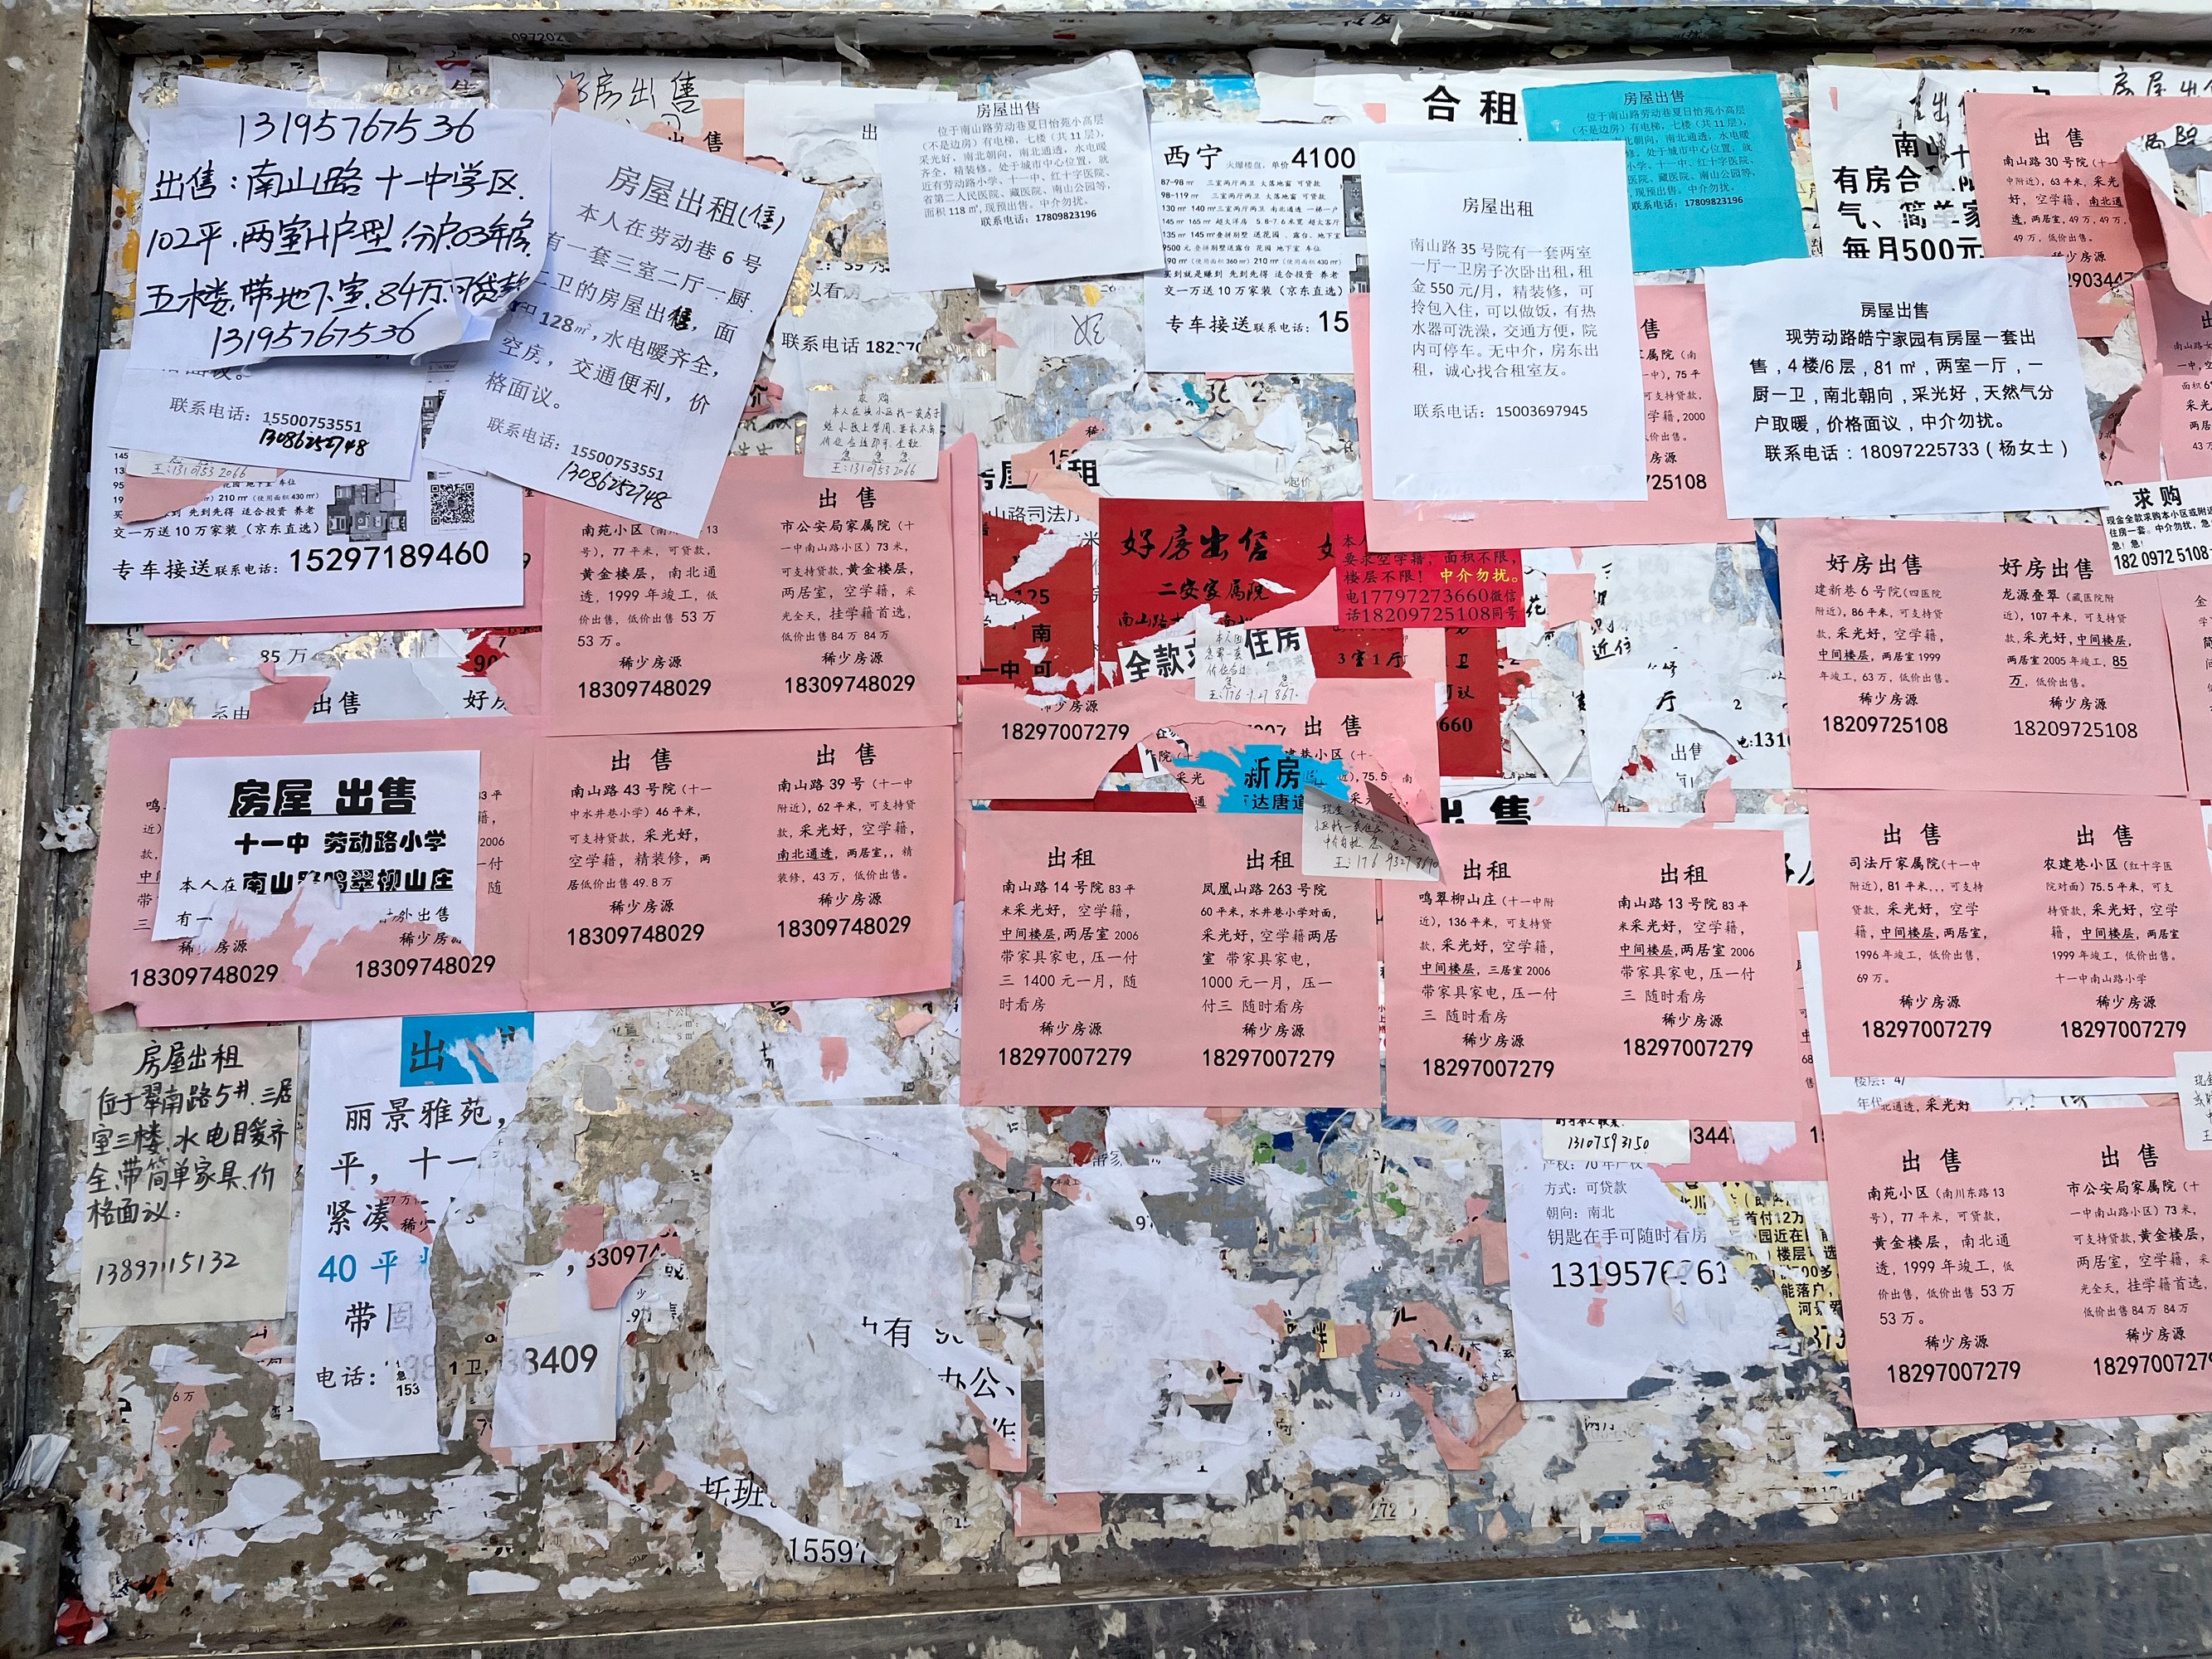 An advertising wall next to Nanshan Park